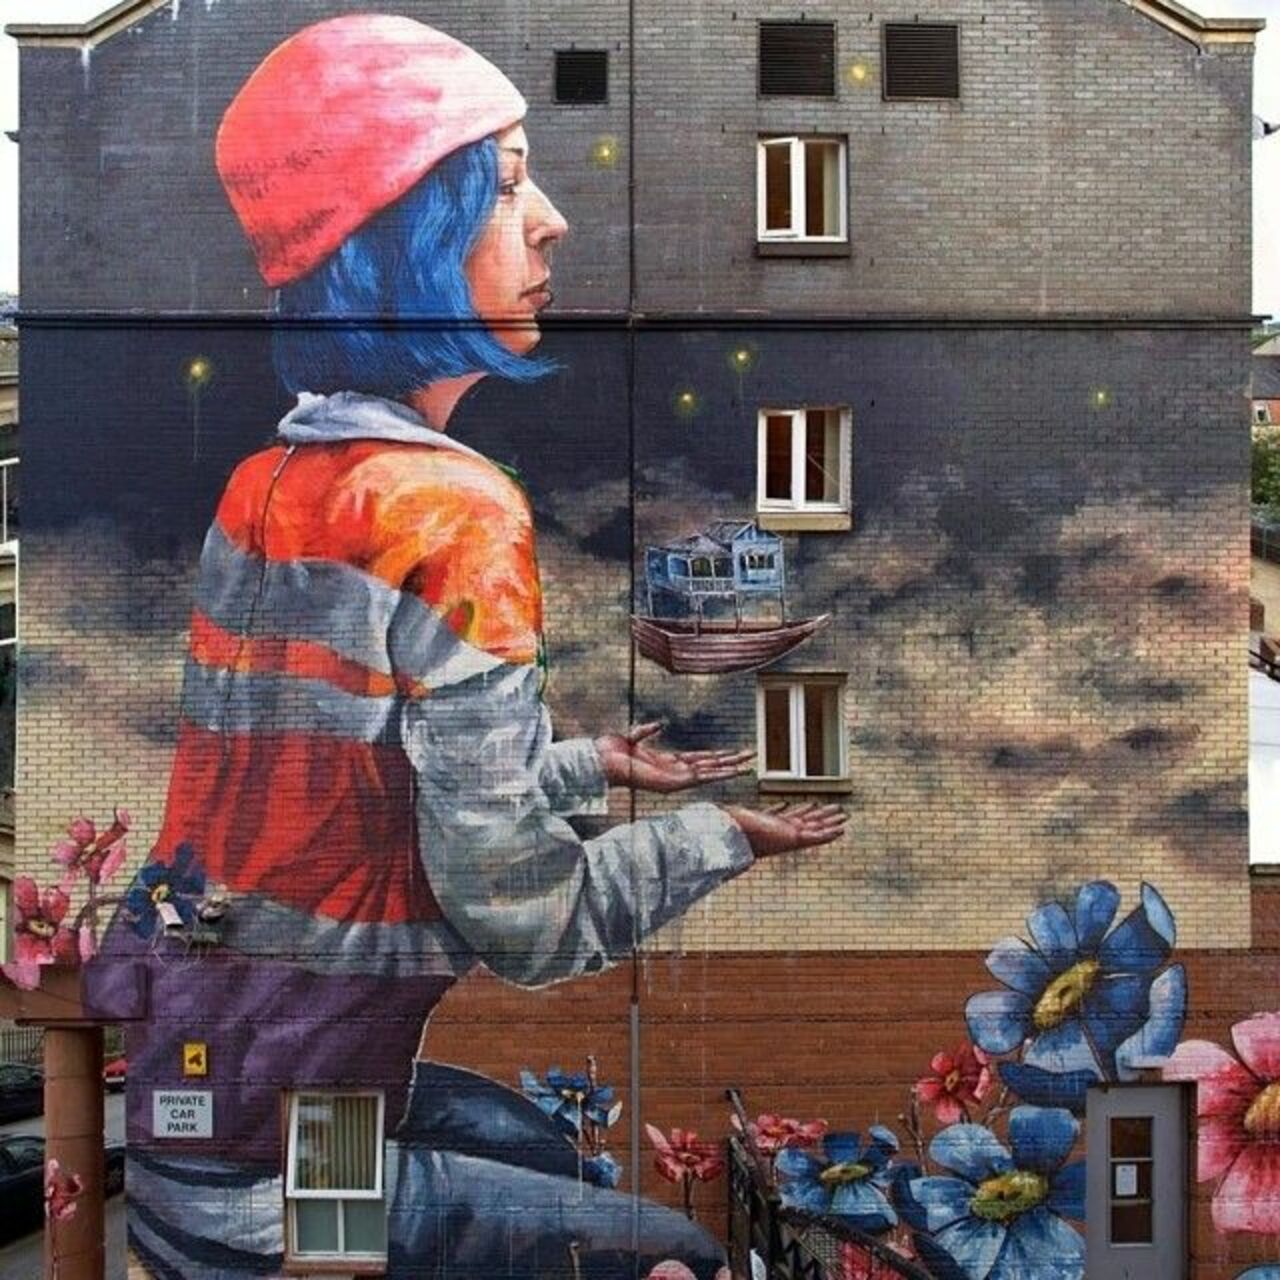 Fintan Magee 

#Graffiti #StreetArt #Mural #painting #Urban #Art http://t.co/im3ixNg334